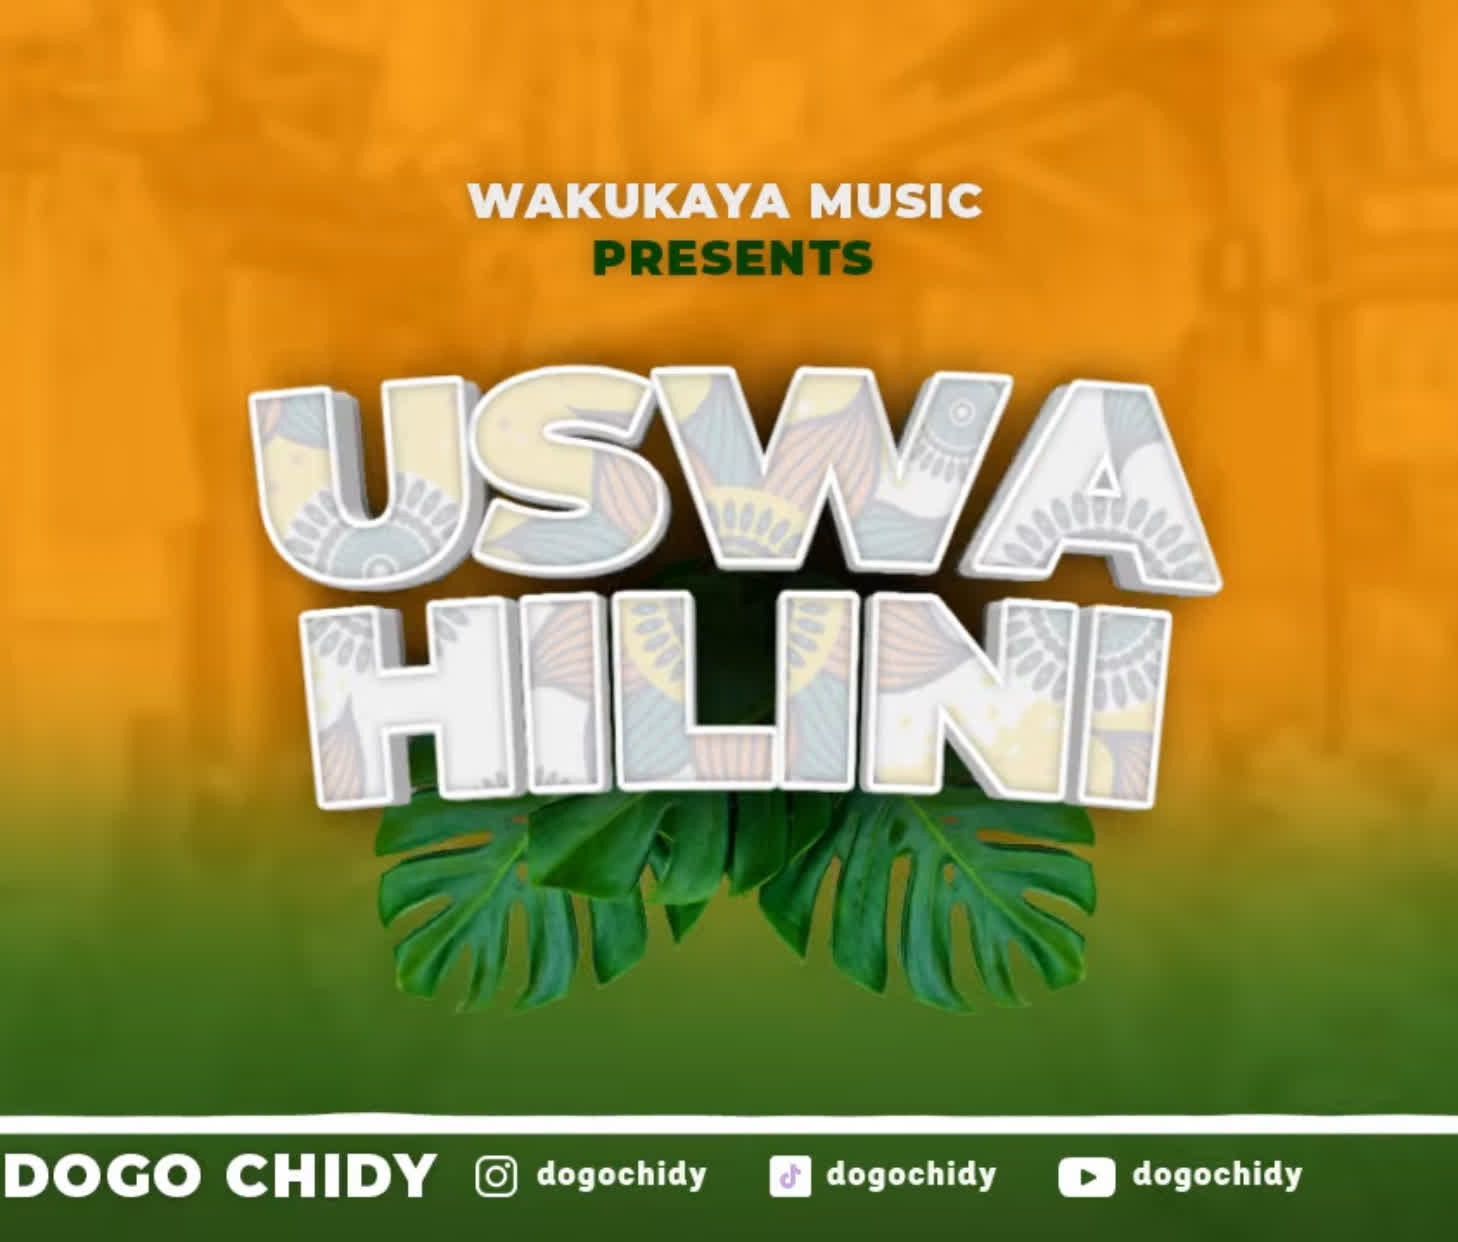 Audio |  Dogo Chidy – Uswahilini | Download MP3